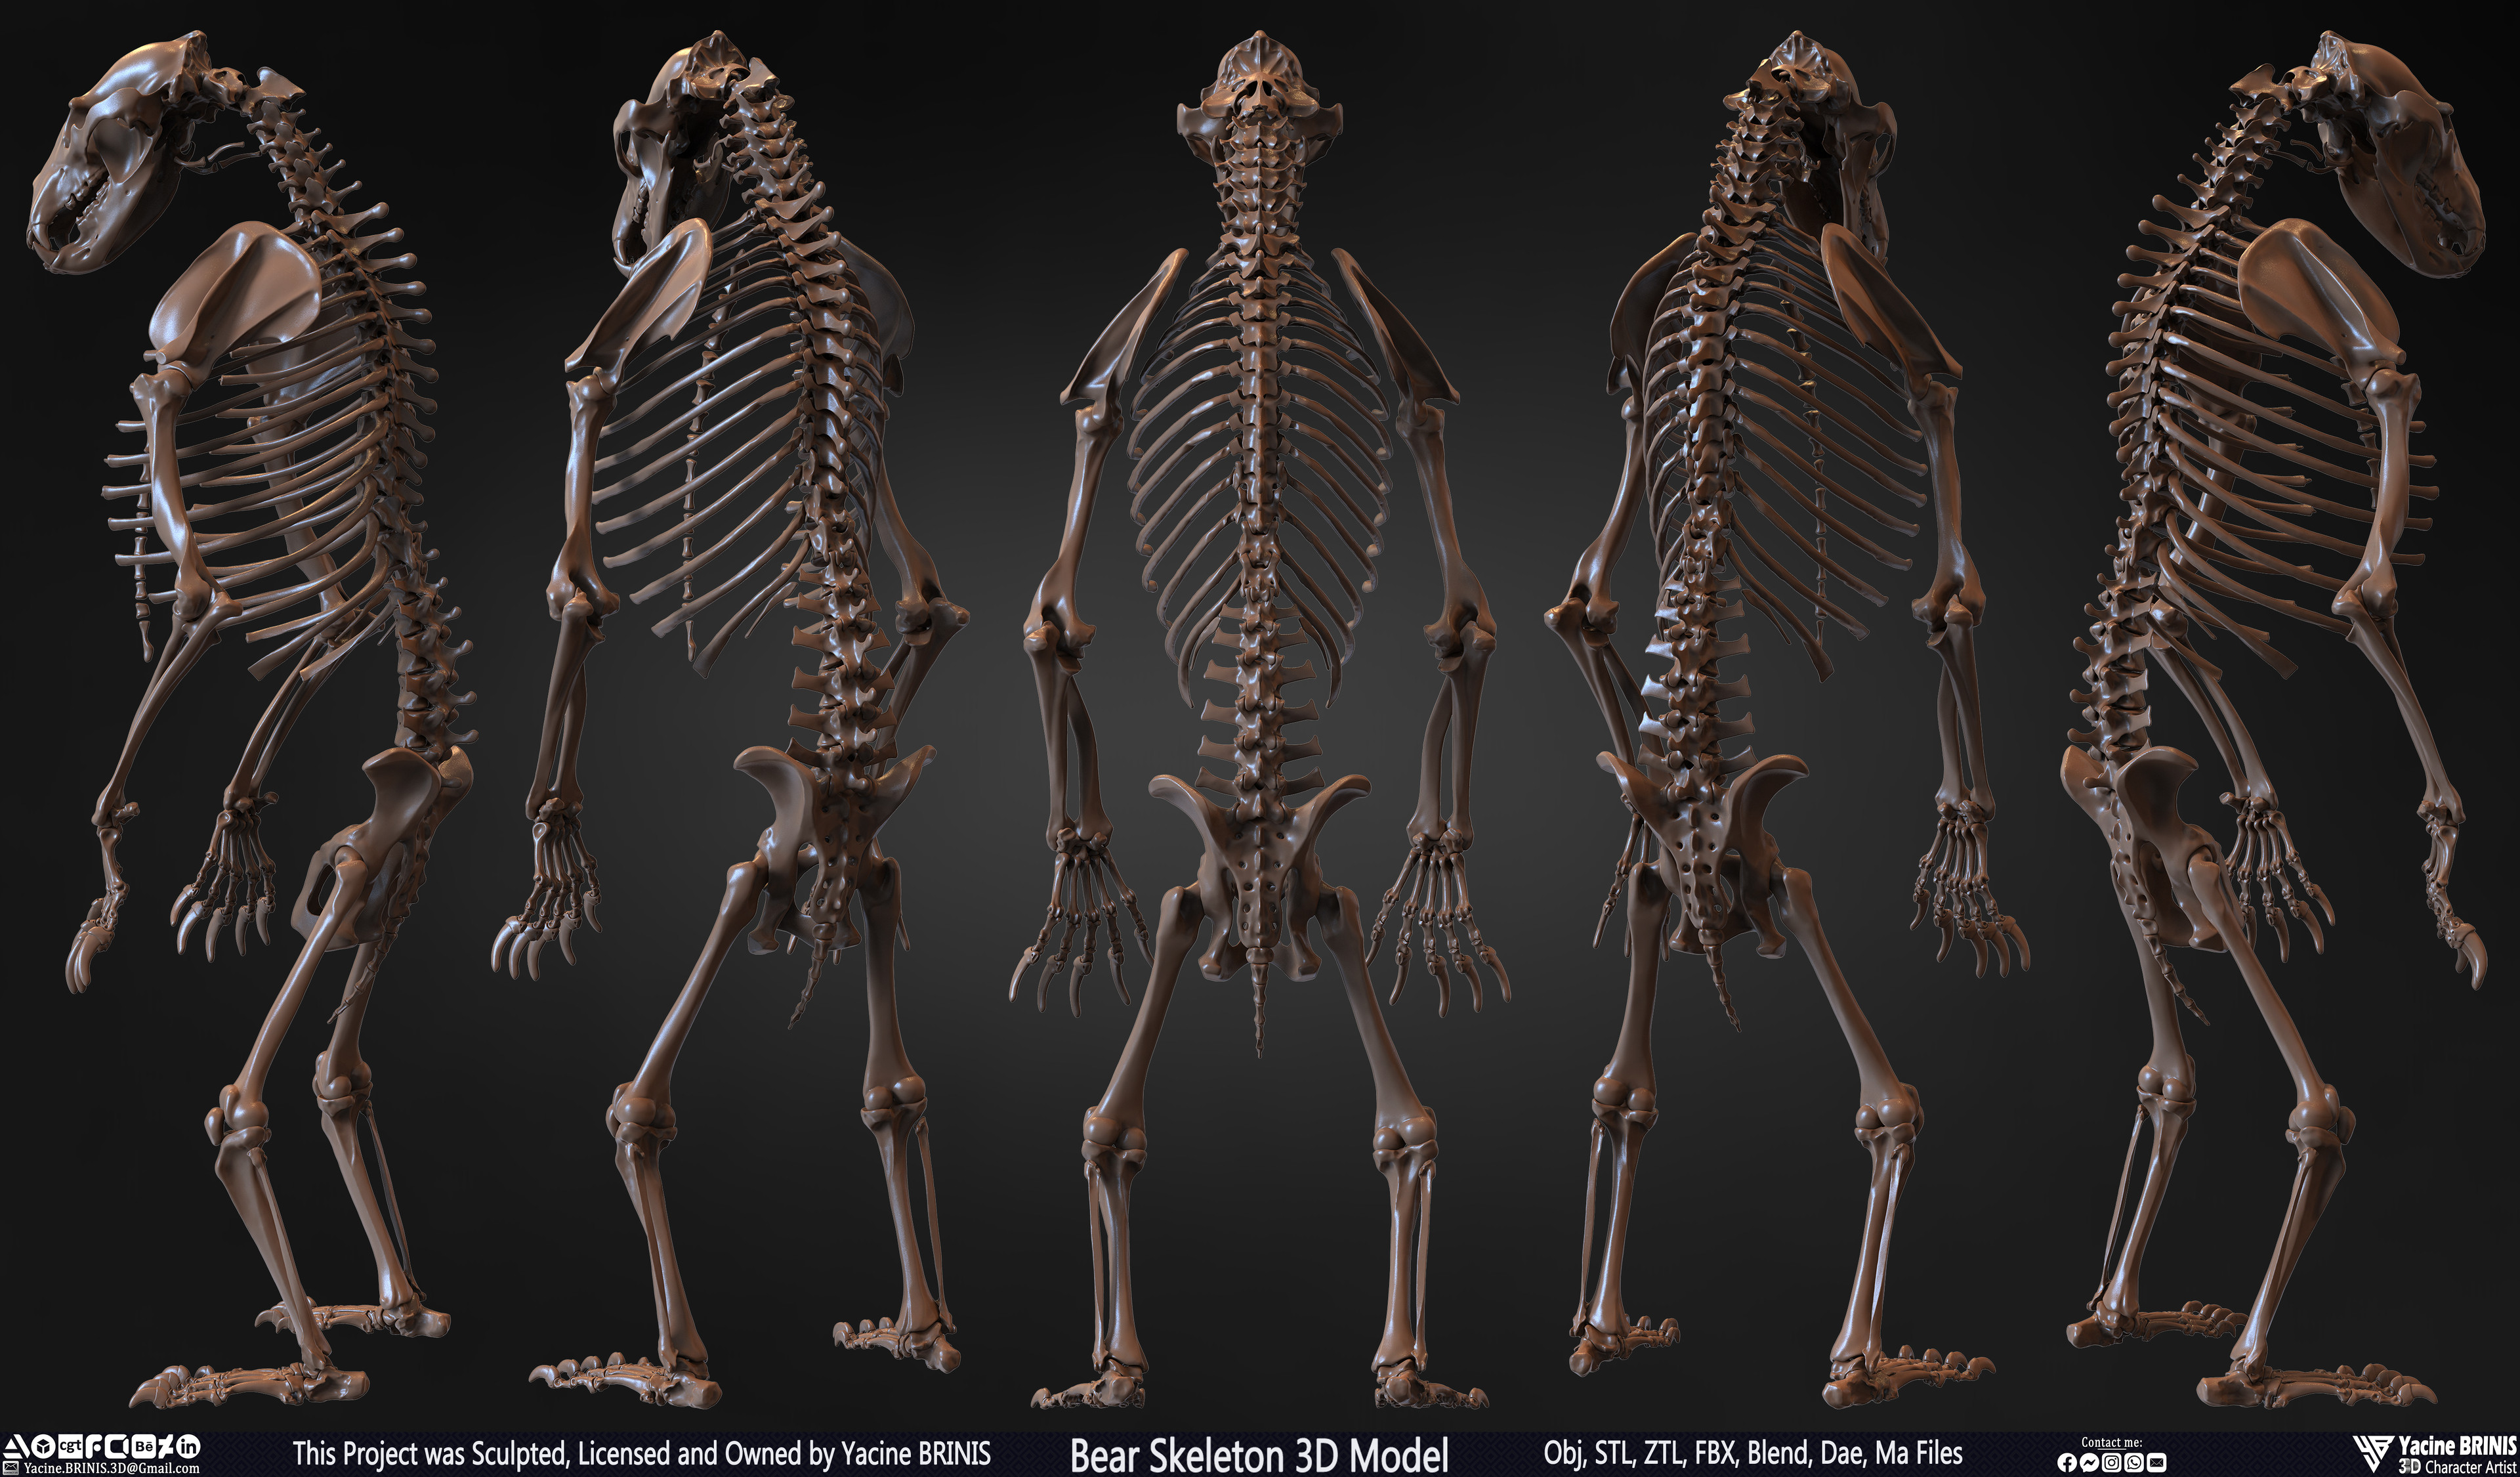 Bear Skeleton 3D Model Sculpted by Yacine BRINIS Set 003